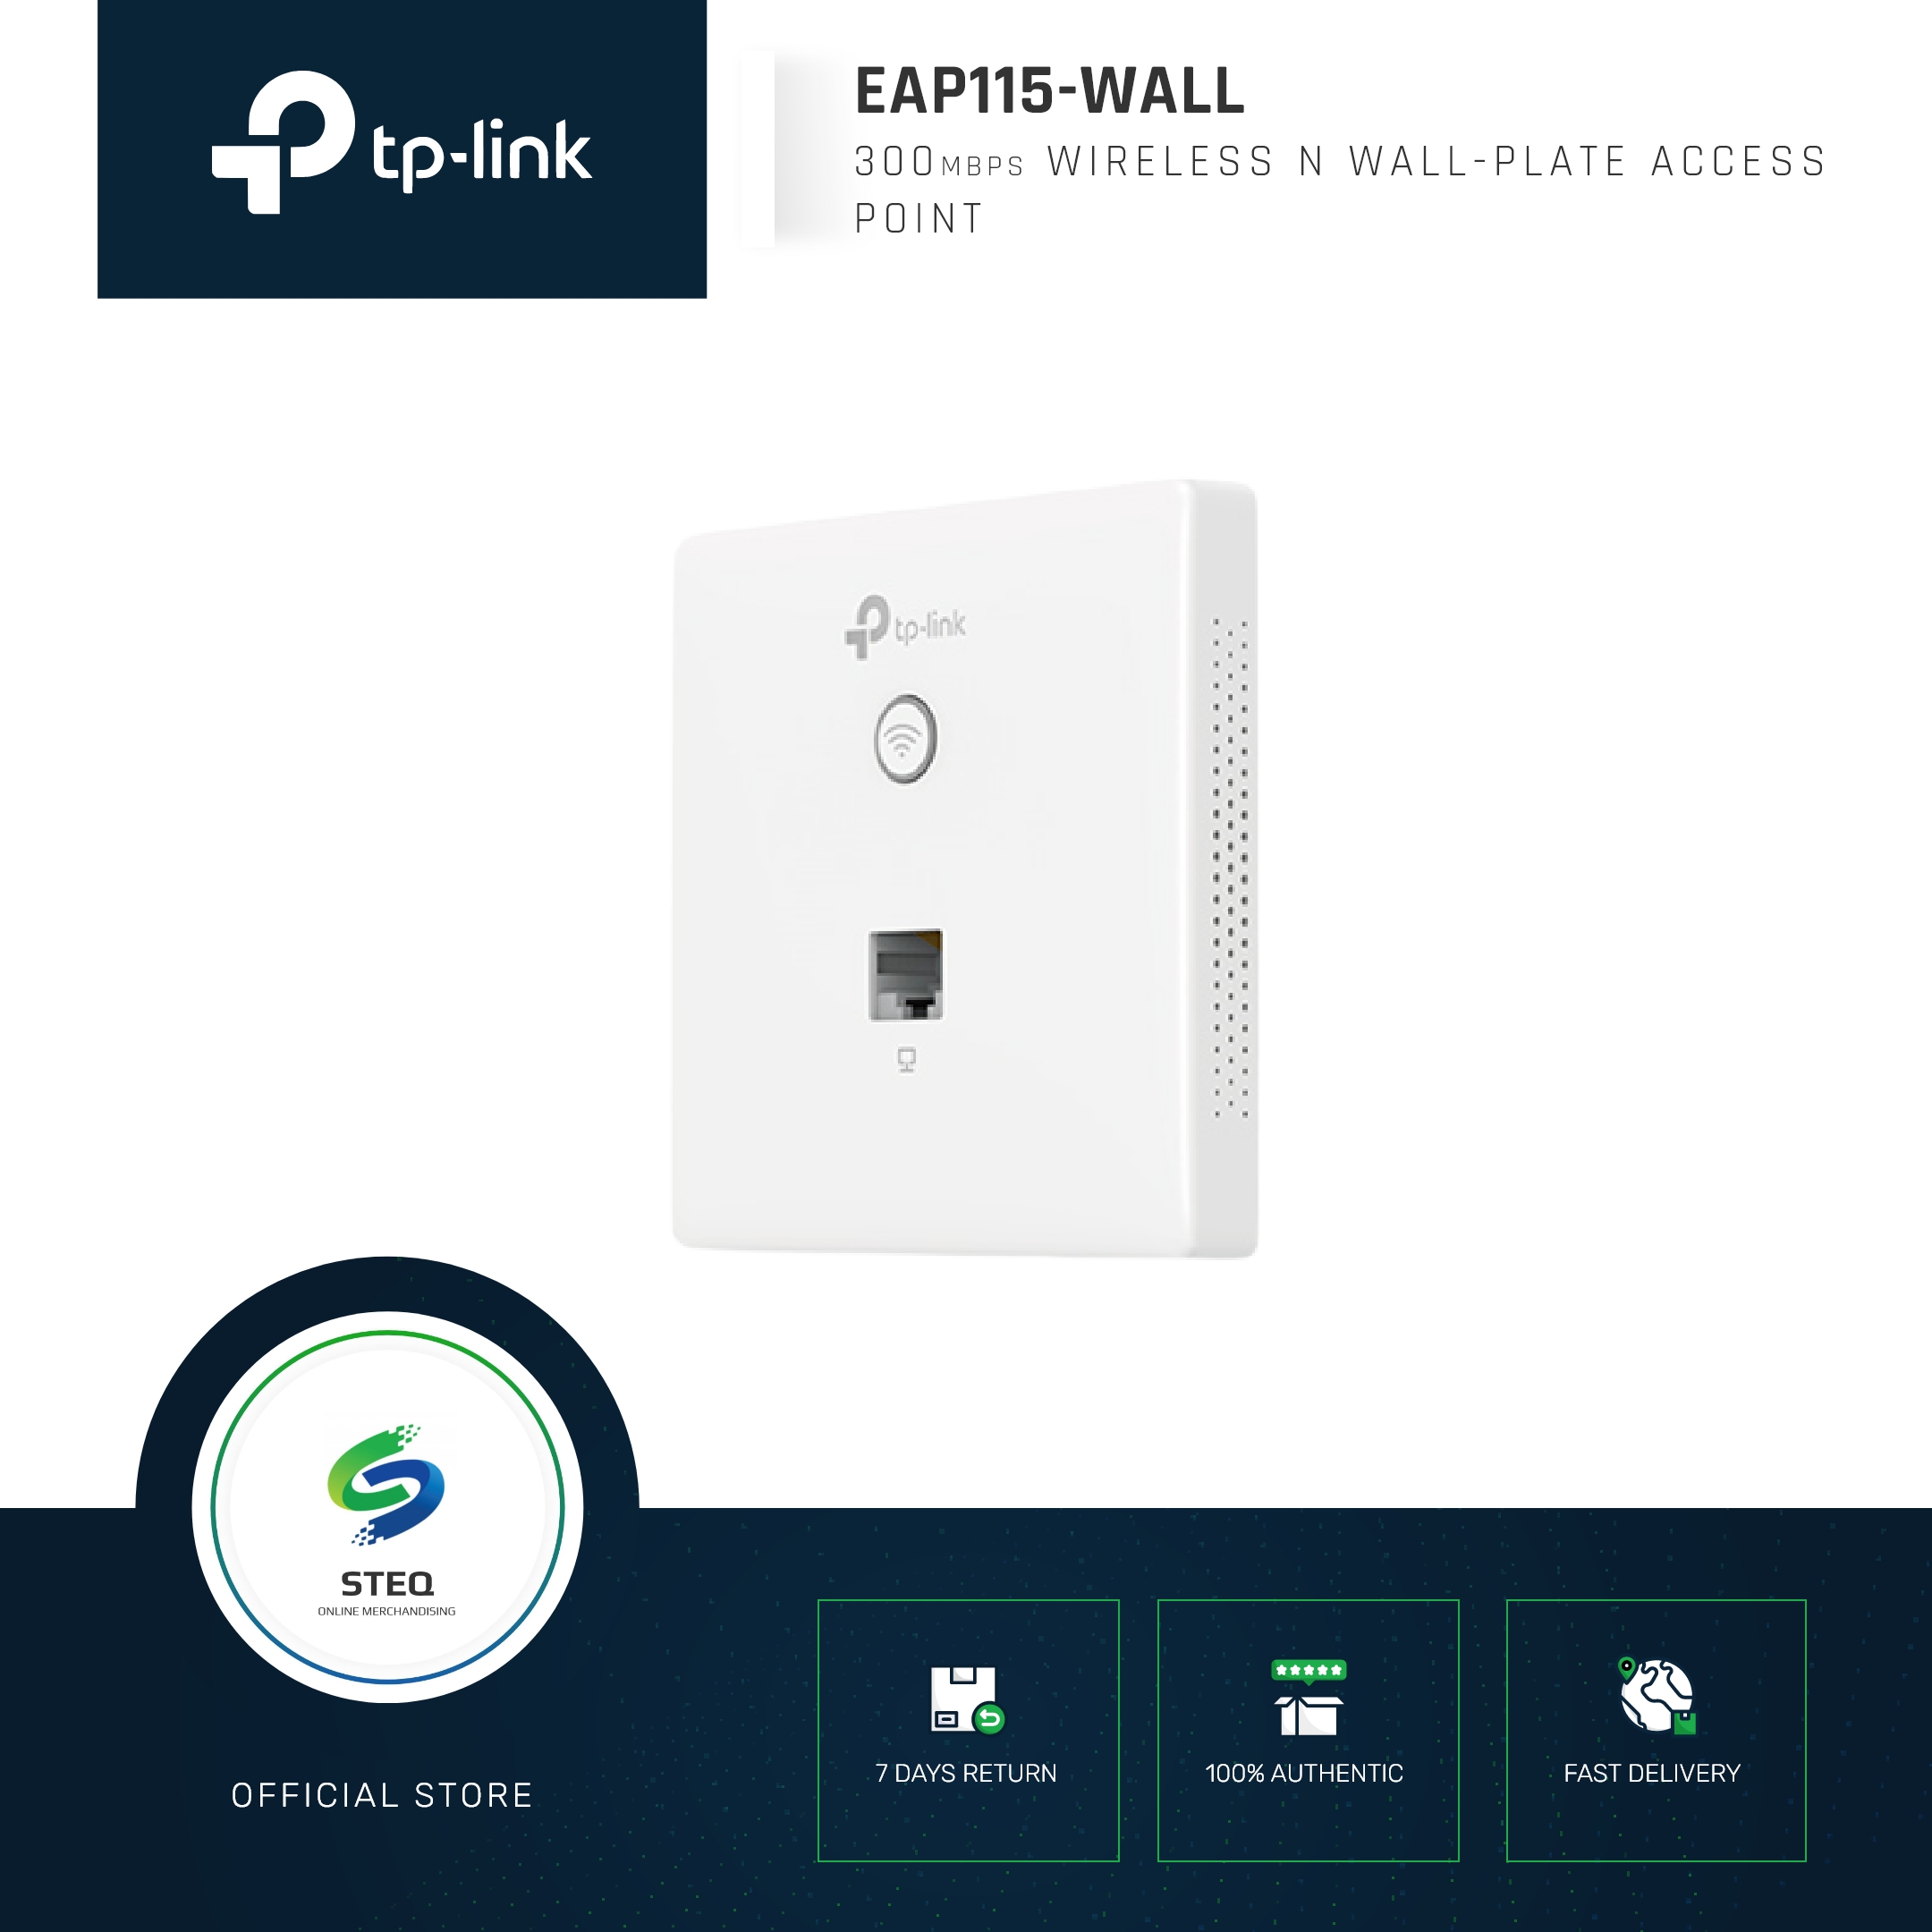 EAP115-WALL TP-Link WLAN STEQ m Access | Lazada 300 PH Point Bit/s PoE